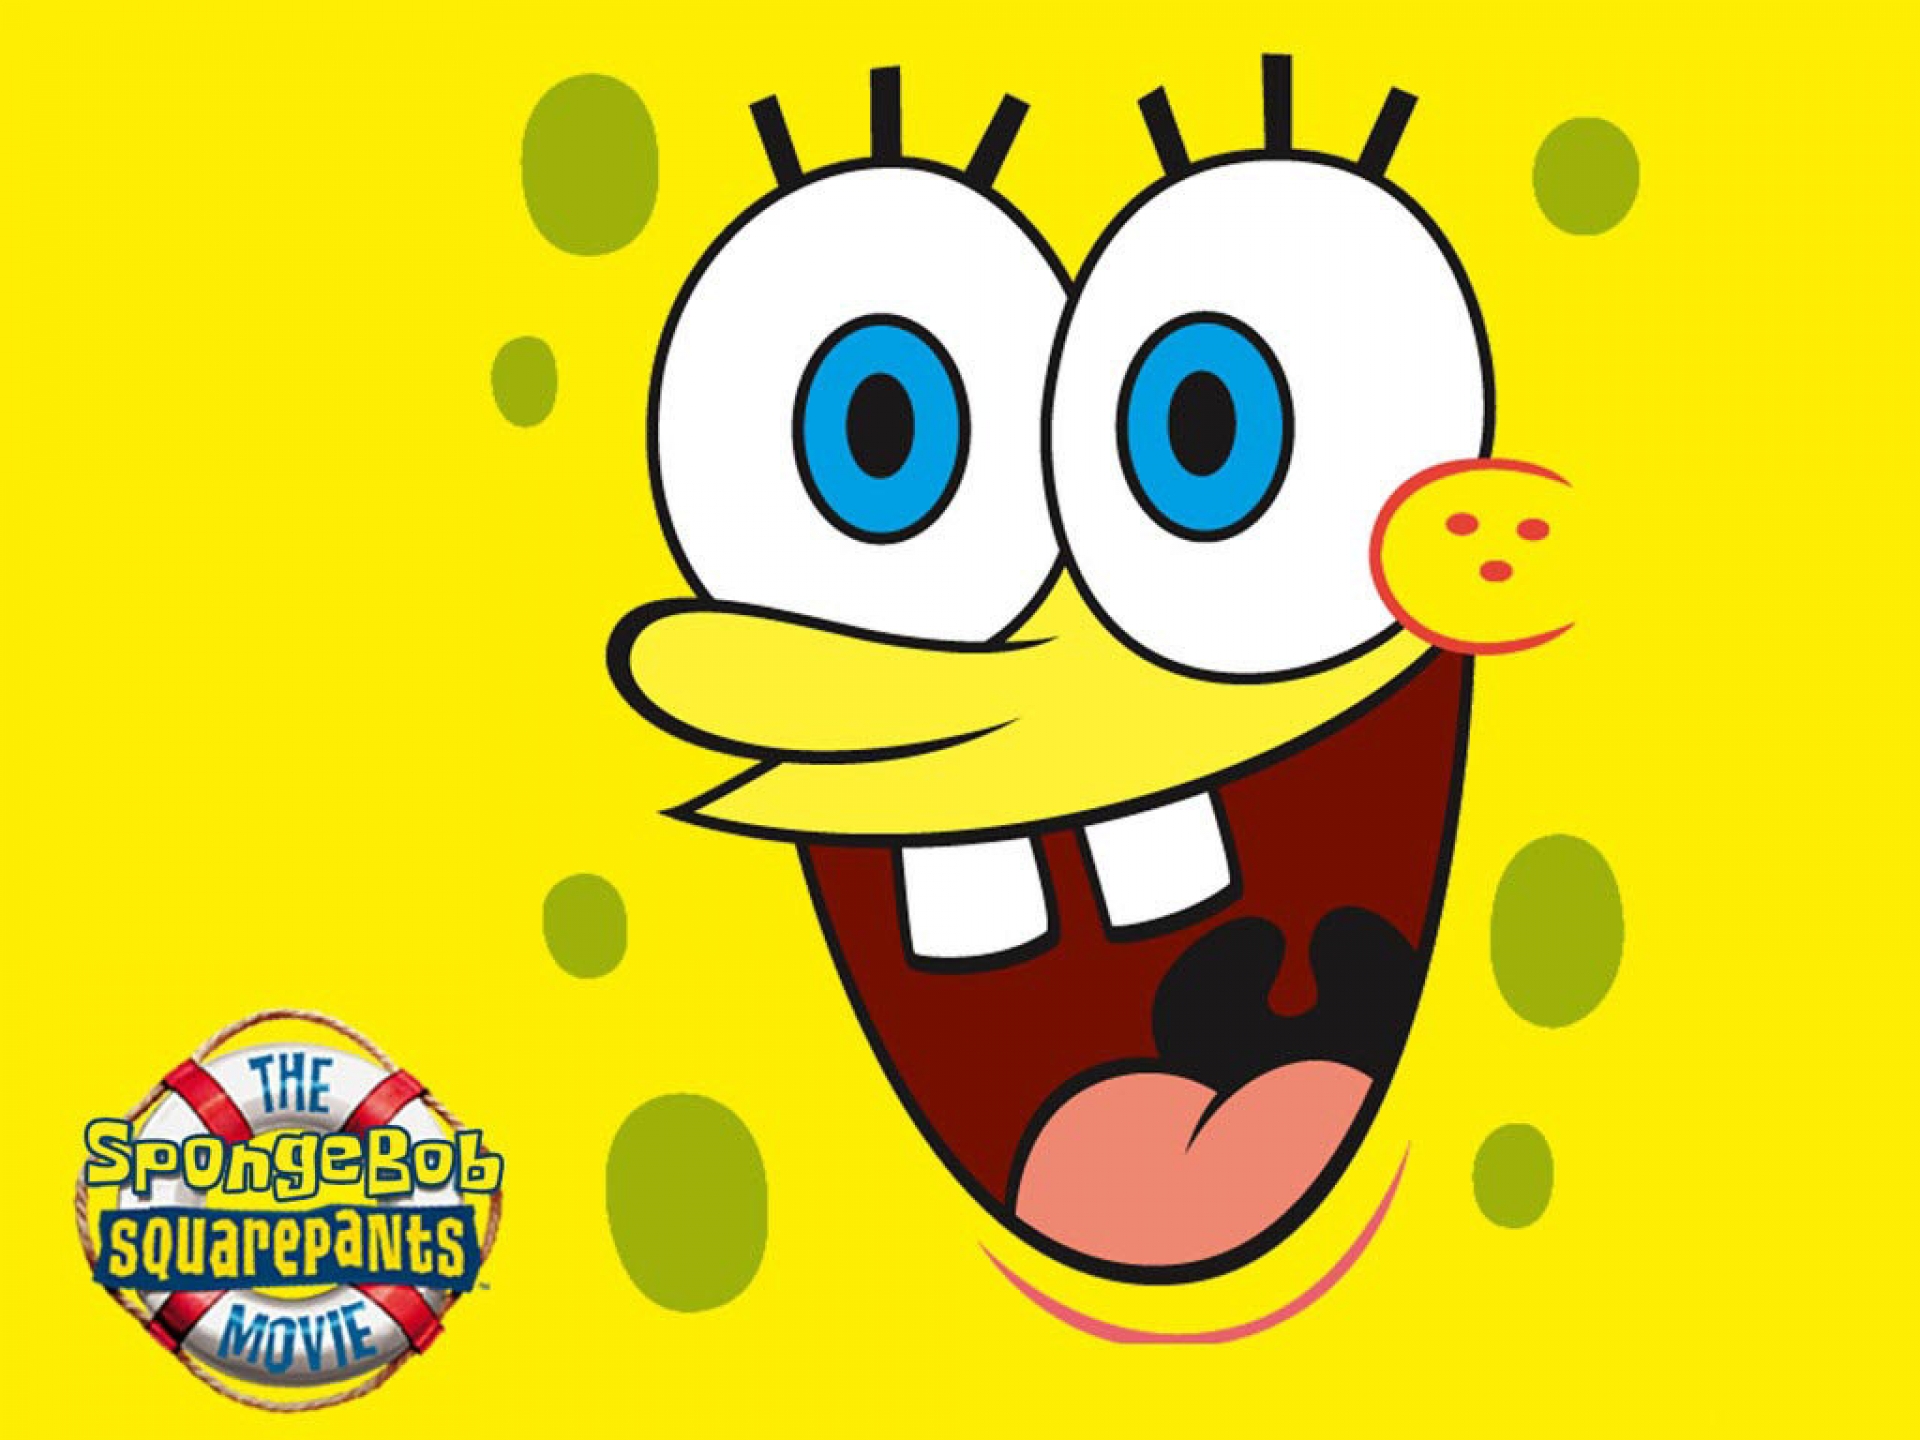 Funny-faces-cartoon-spongebob (1) - FreakyPic.com | Funny Images ...